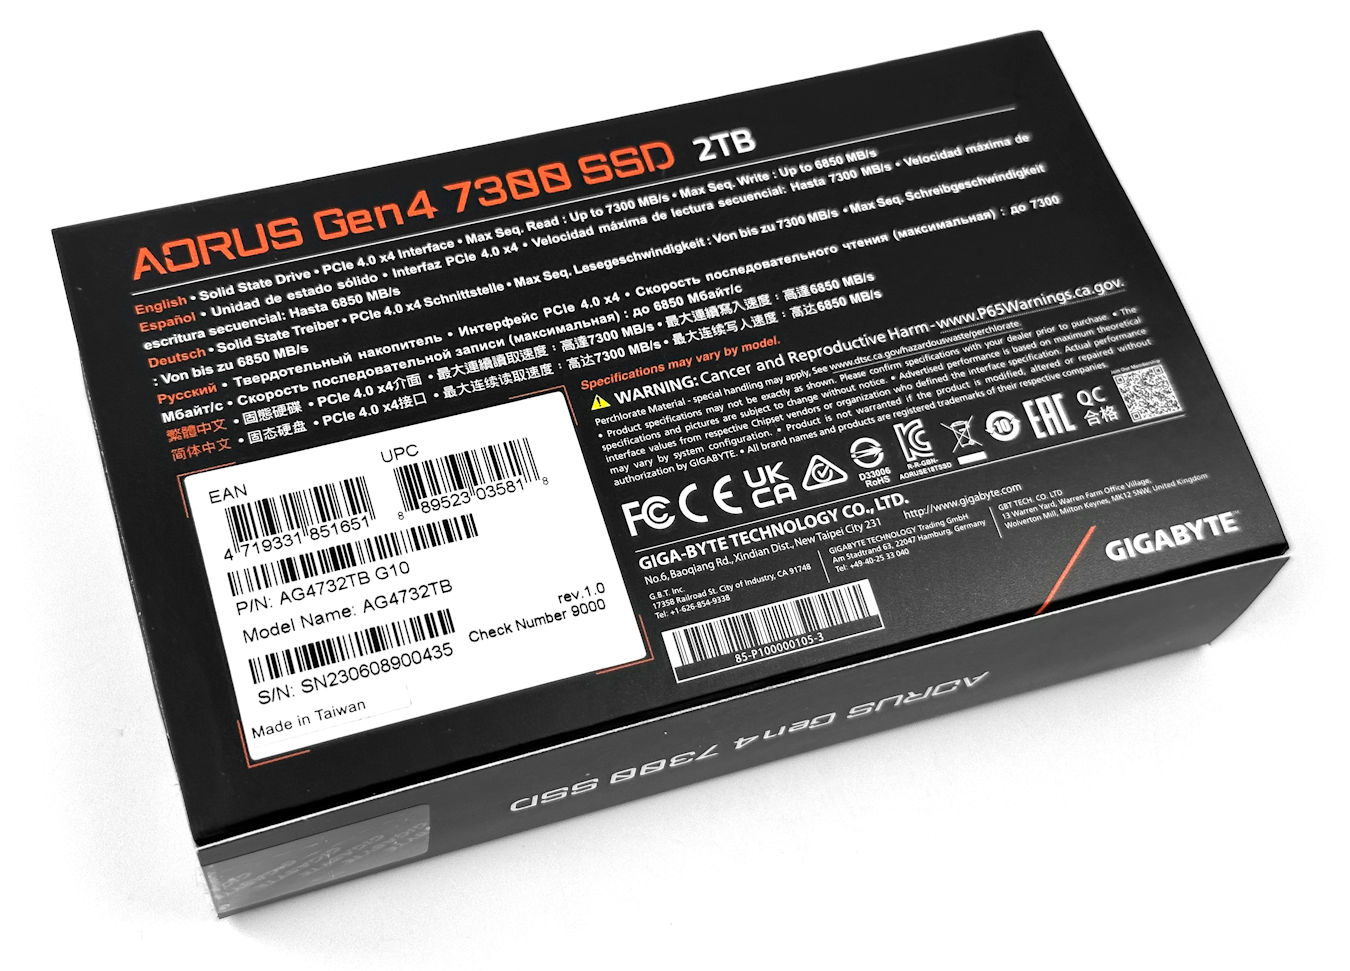 AORUS Gen4 7300 SSD 2TB